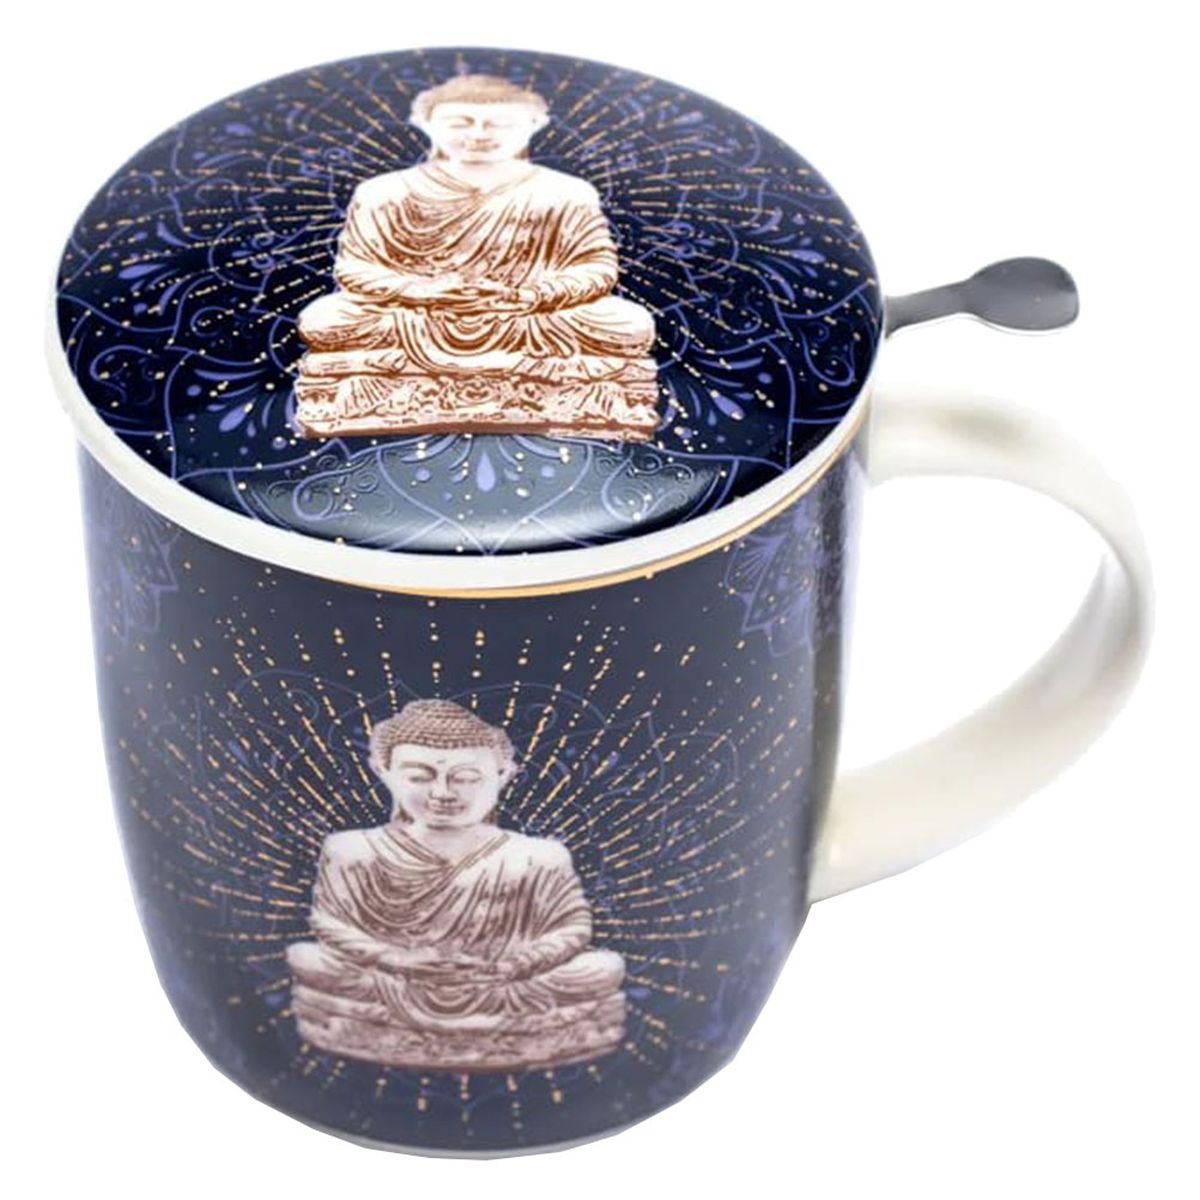 Mug avec infuseur mtal - Bouddha bleu Nuit